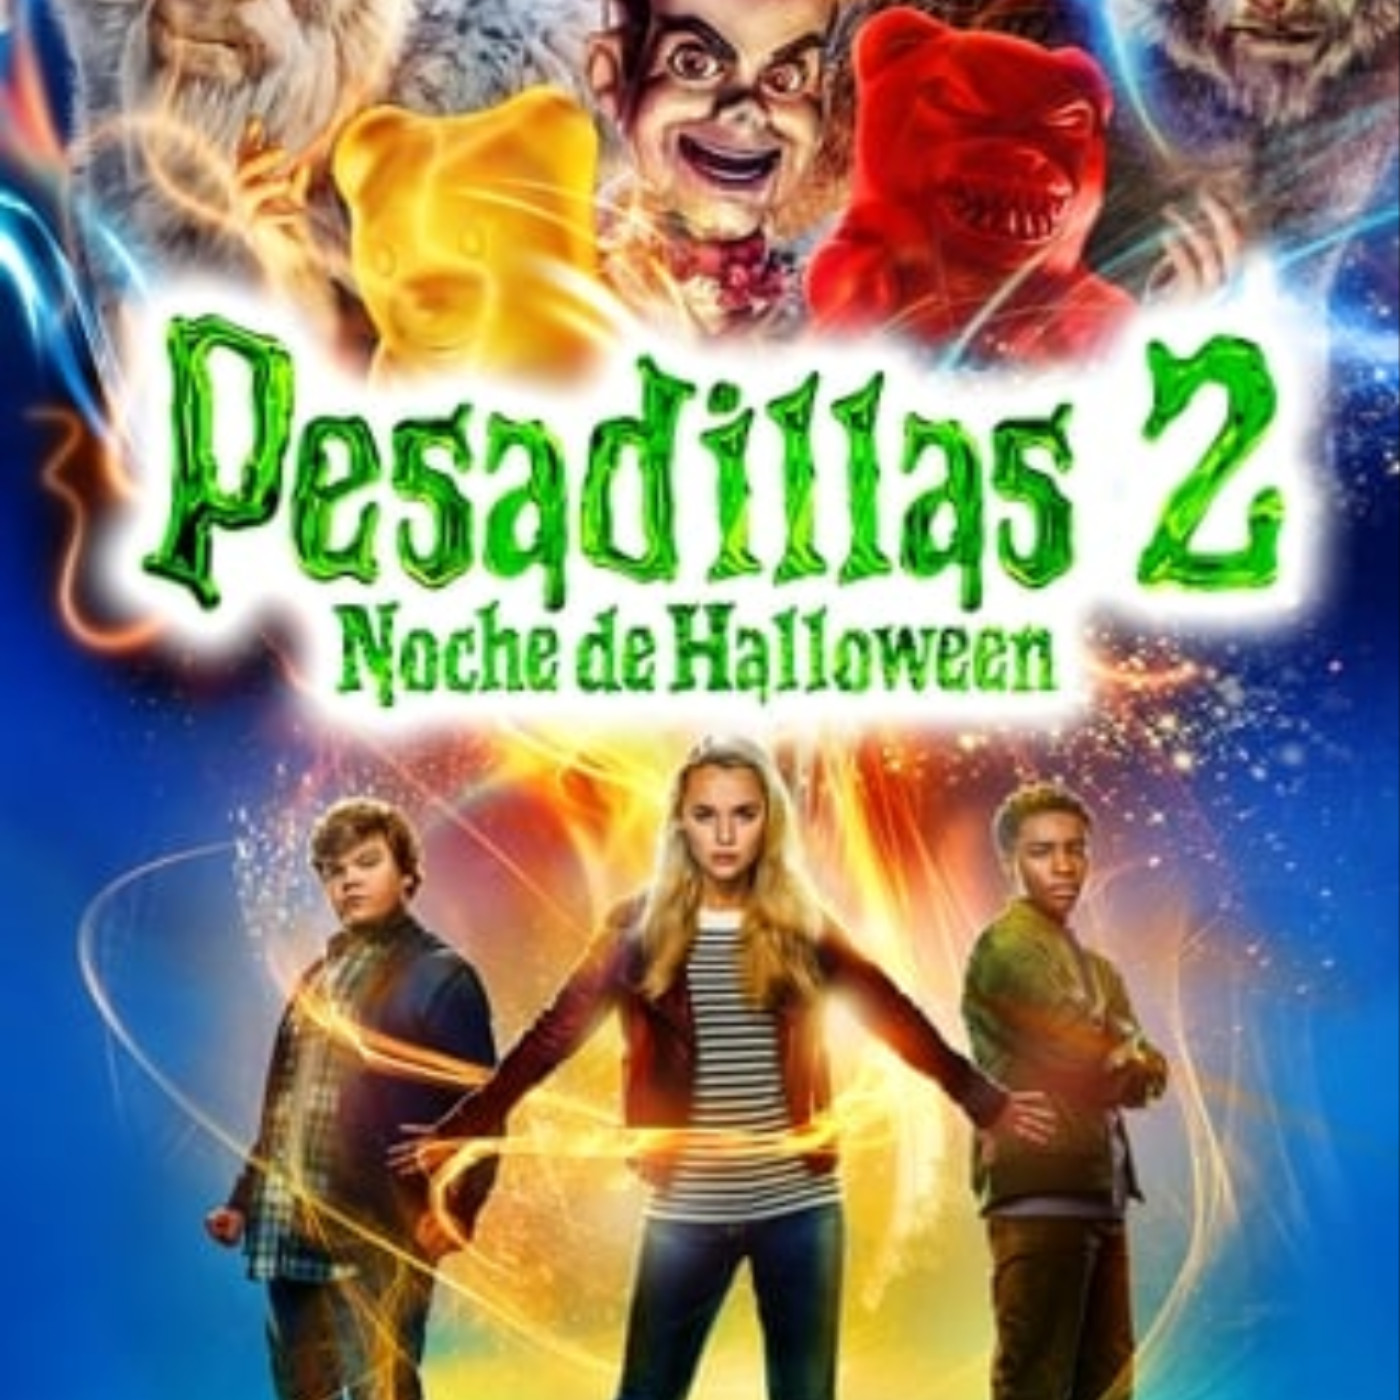 Ver Pesadillas 2: noche de Halloween 2018 pelicula completa en español |  Podcast on SoundOn